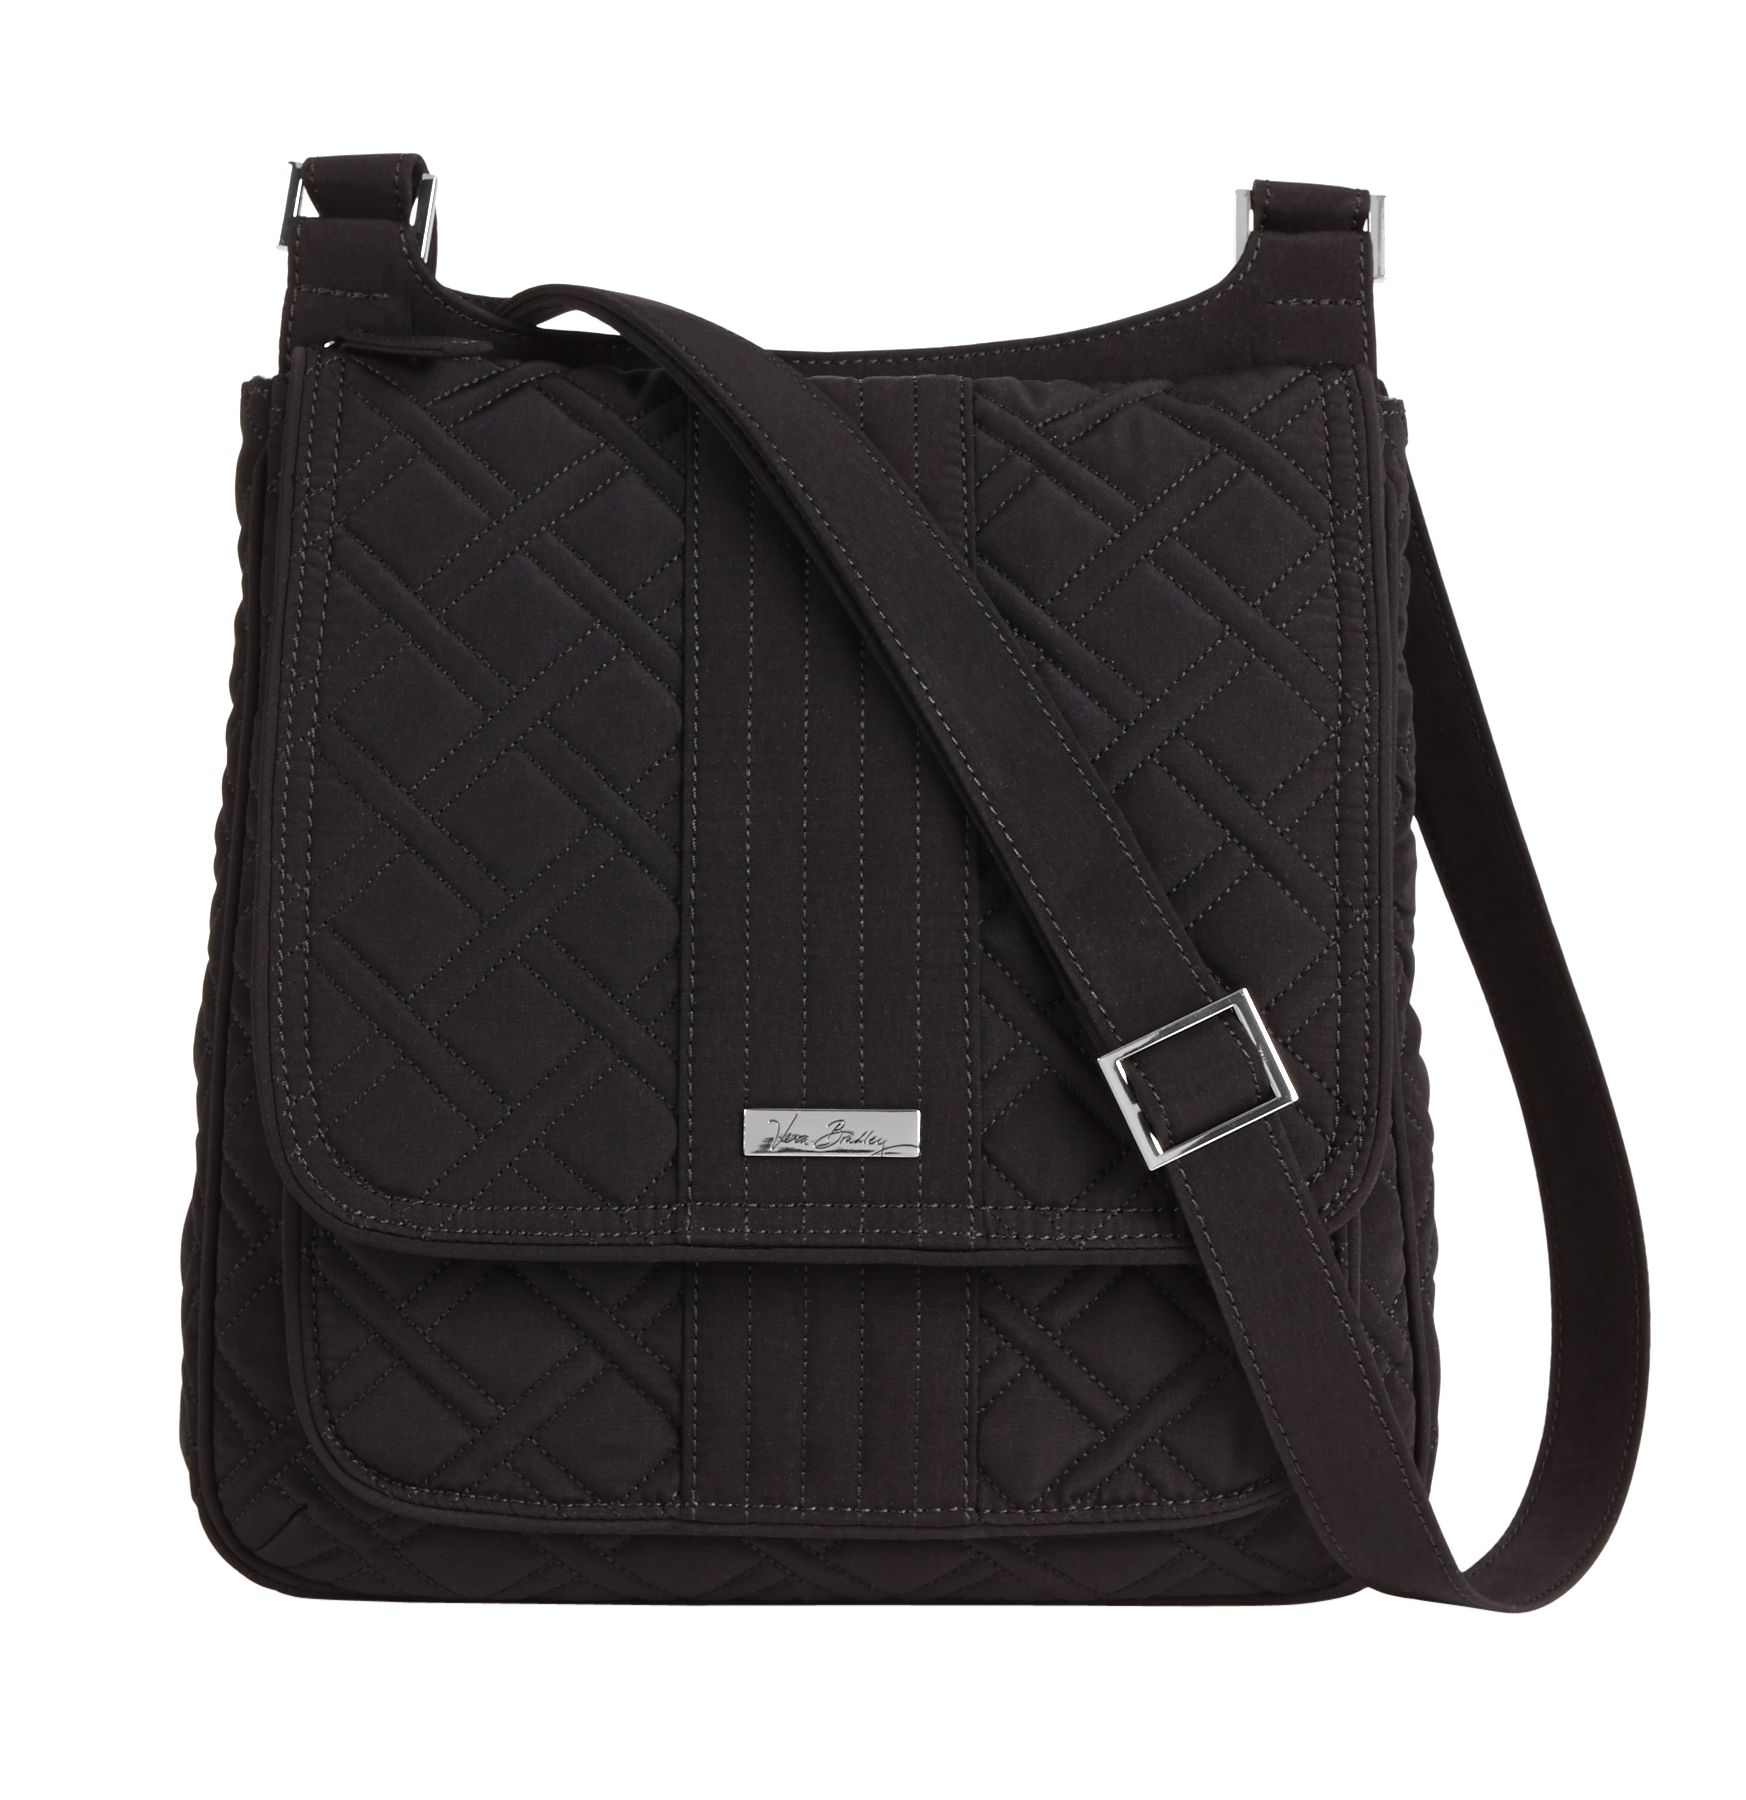 Vera Bradley Mailbag Crossbody Bag in Classic Black